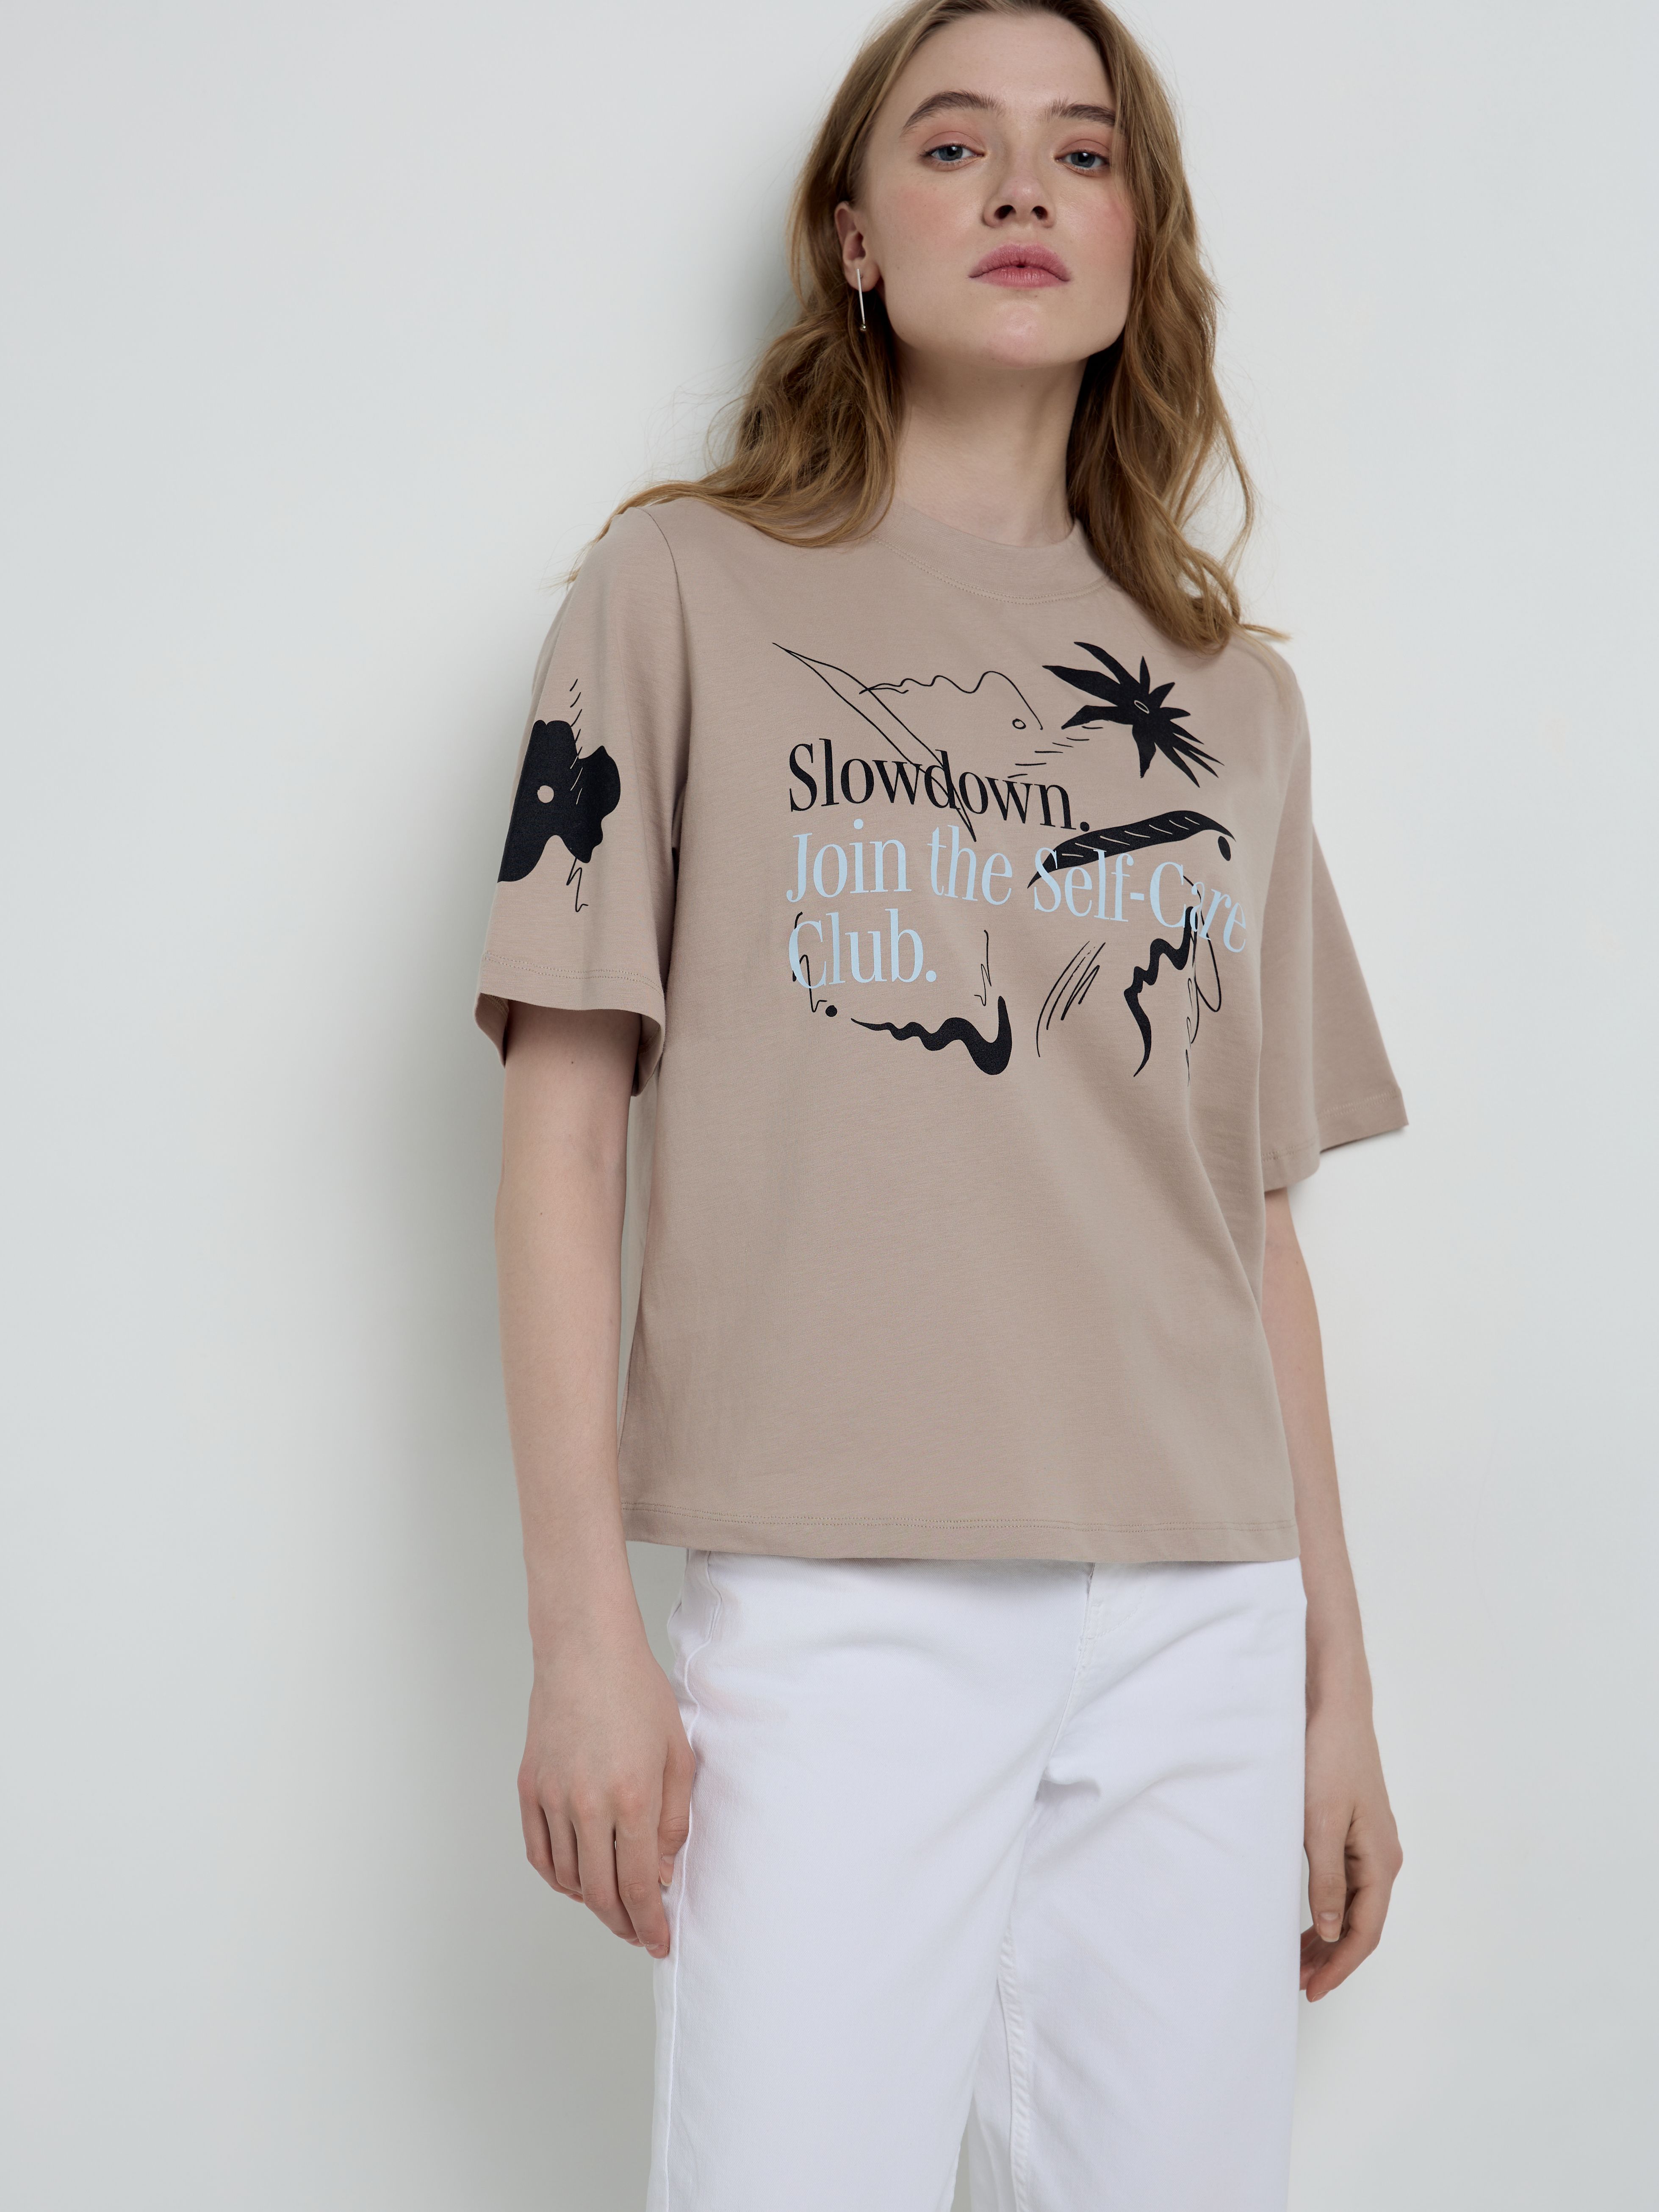 Свободная футболка из хлопка с рисунком «Slowdown» LD 2096 Conte ⭐️, цвет beige, размер 170-100/xl - фото 1